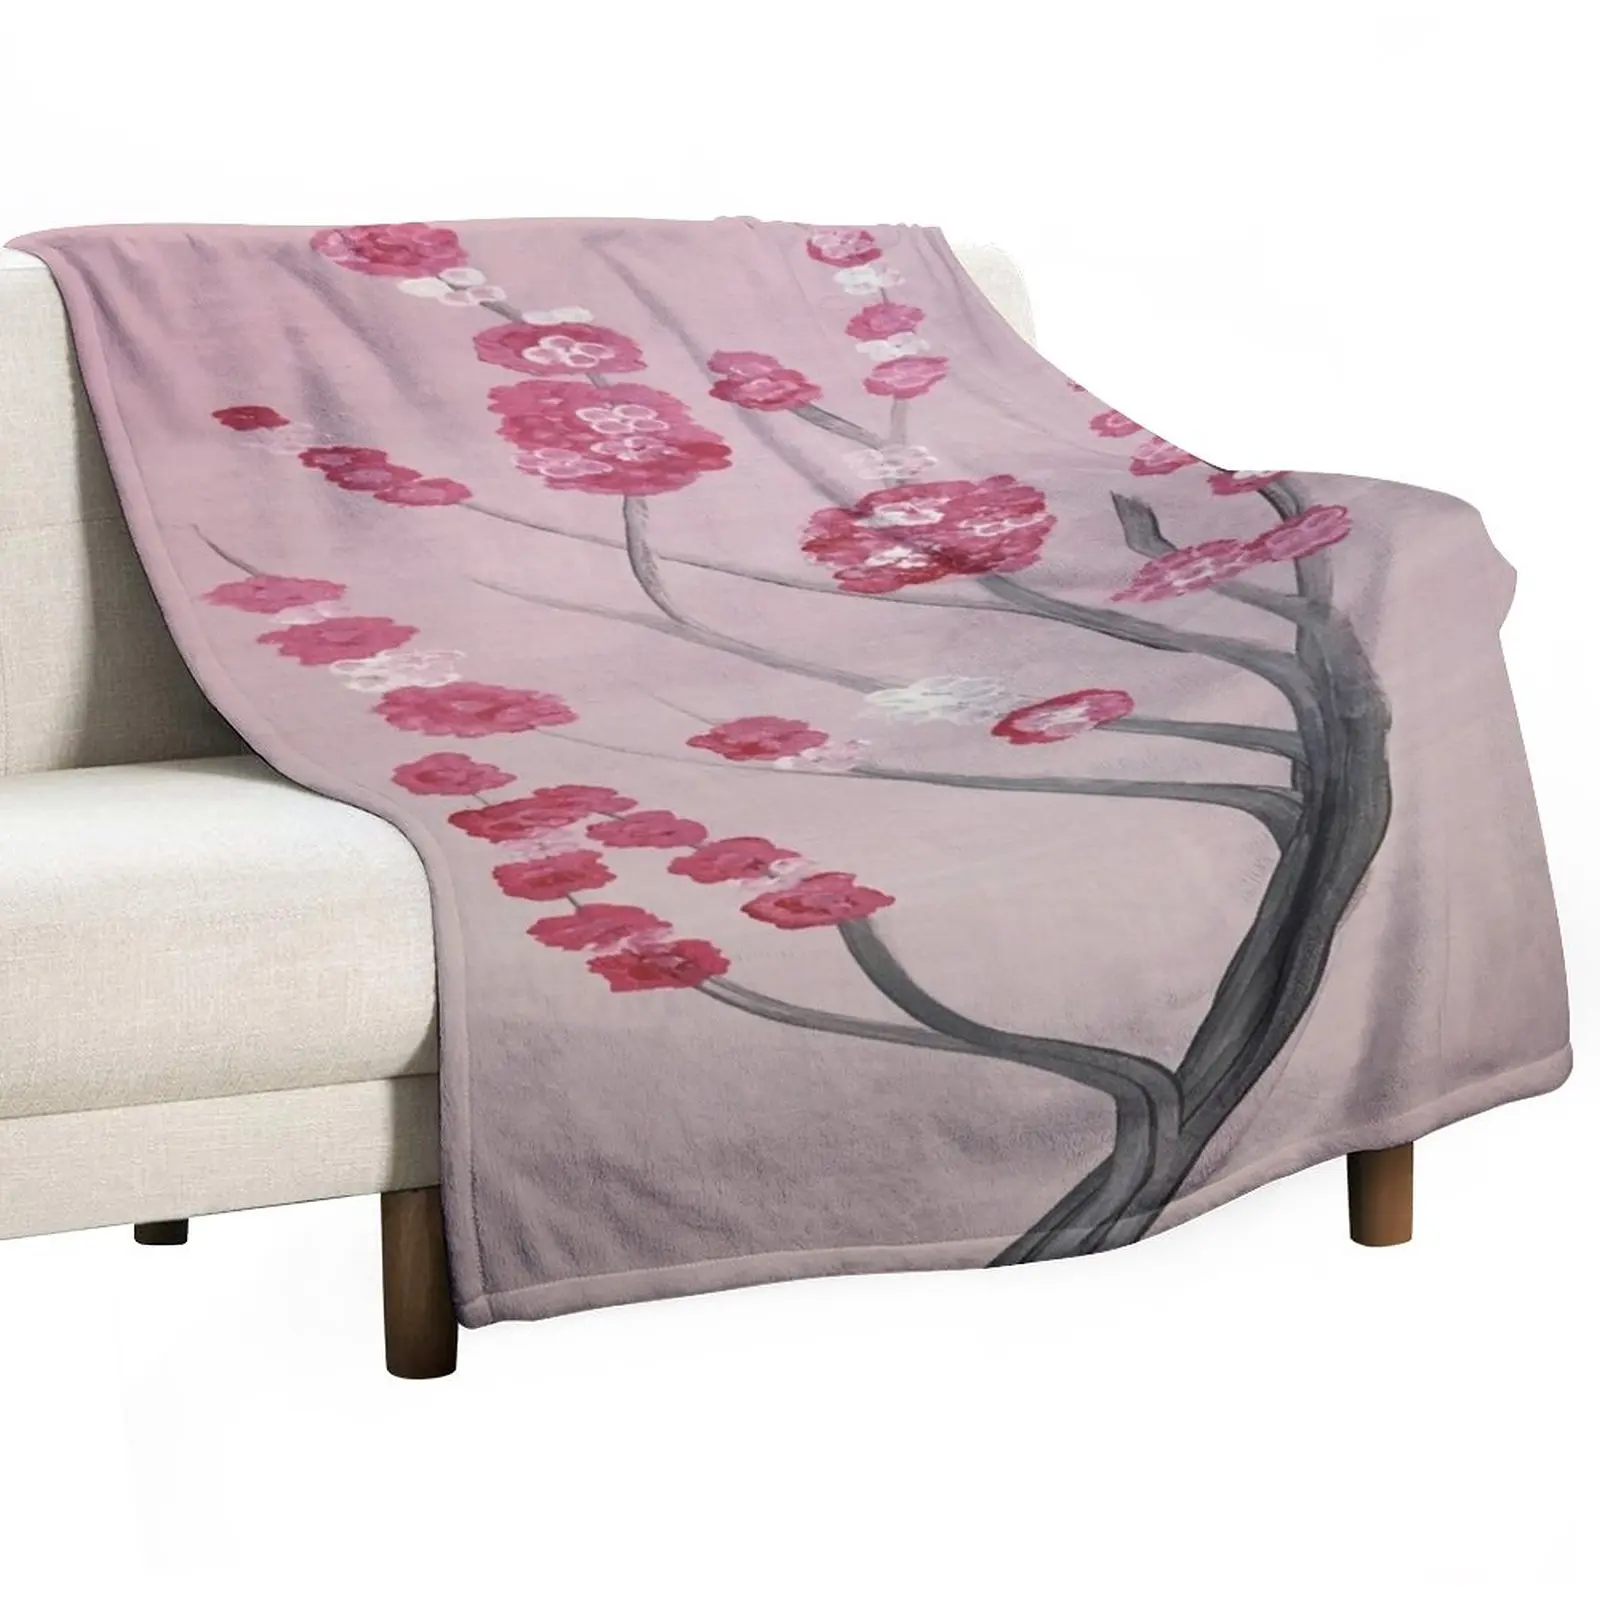 

Cherry Blossom Throw Blanket Dorm Room Essentials Sofa Throw Blanket Winter bed blankets Polar blanket